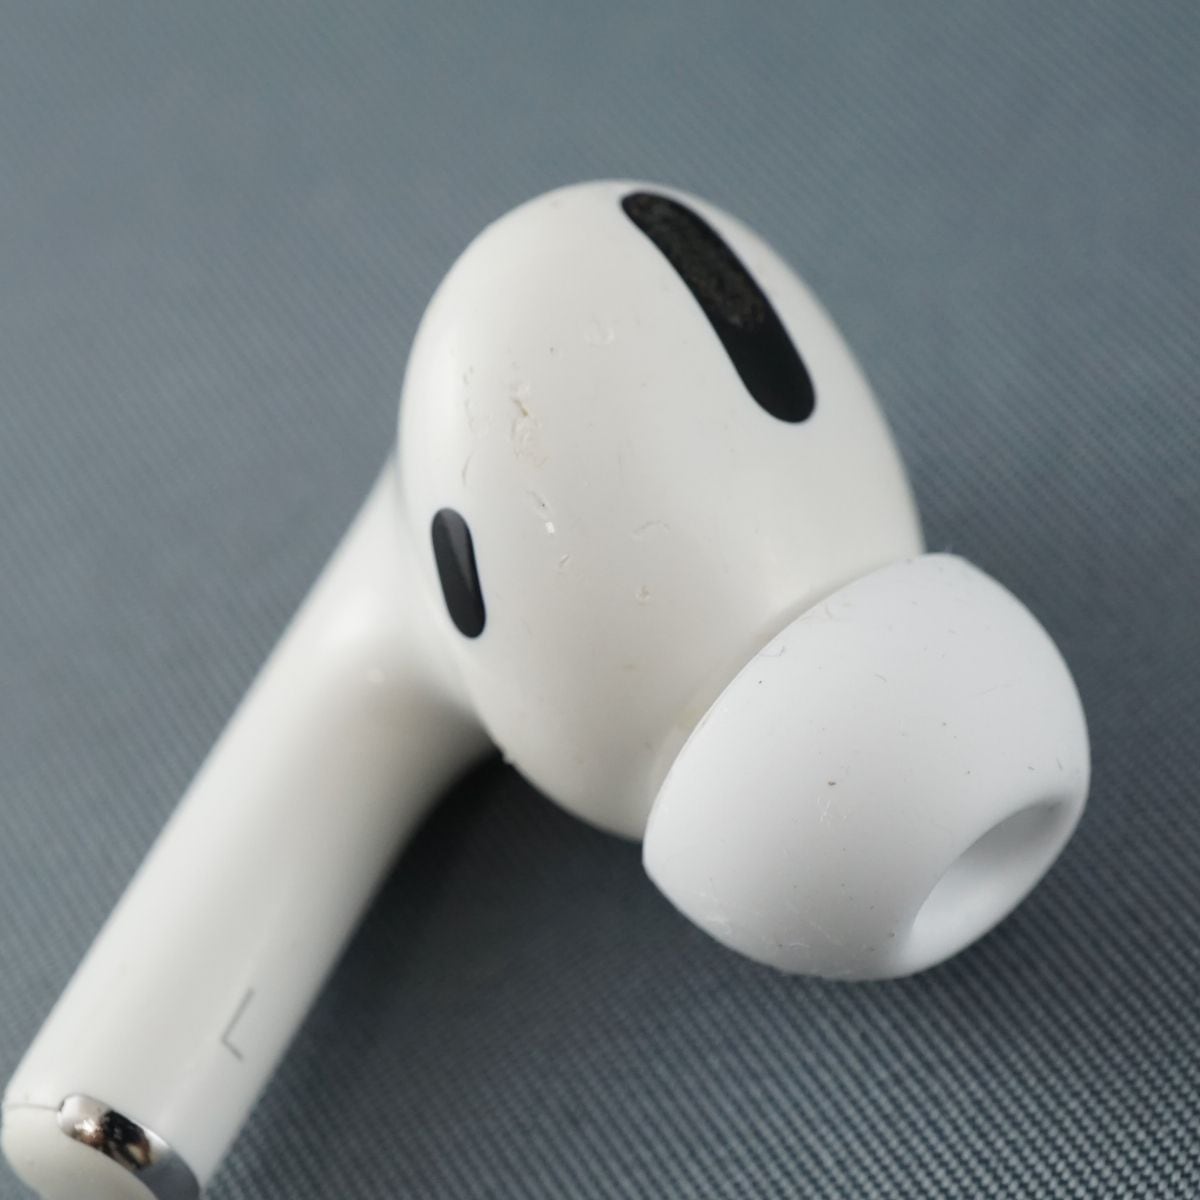 Apple AirPods Pro エアーポッズ プロ 左イヤホンのみ USED品 第一世代 L 片耳 左耳 A2084 MWP22J/A 完動品  V9053